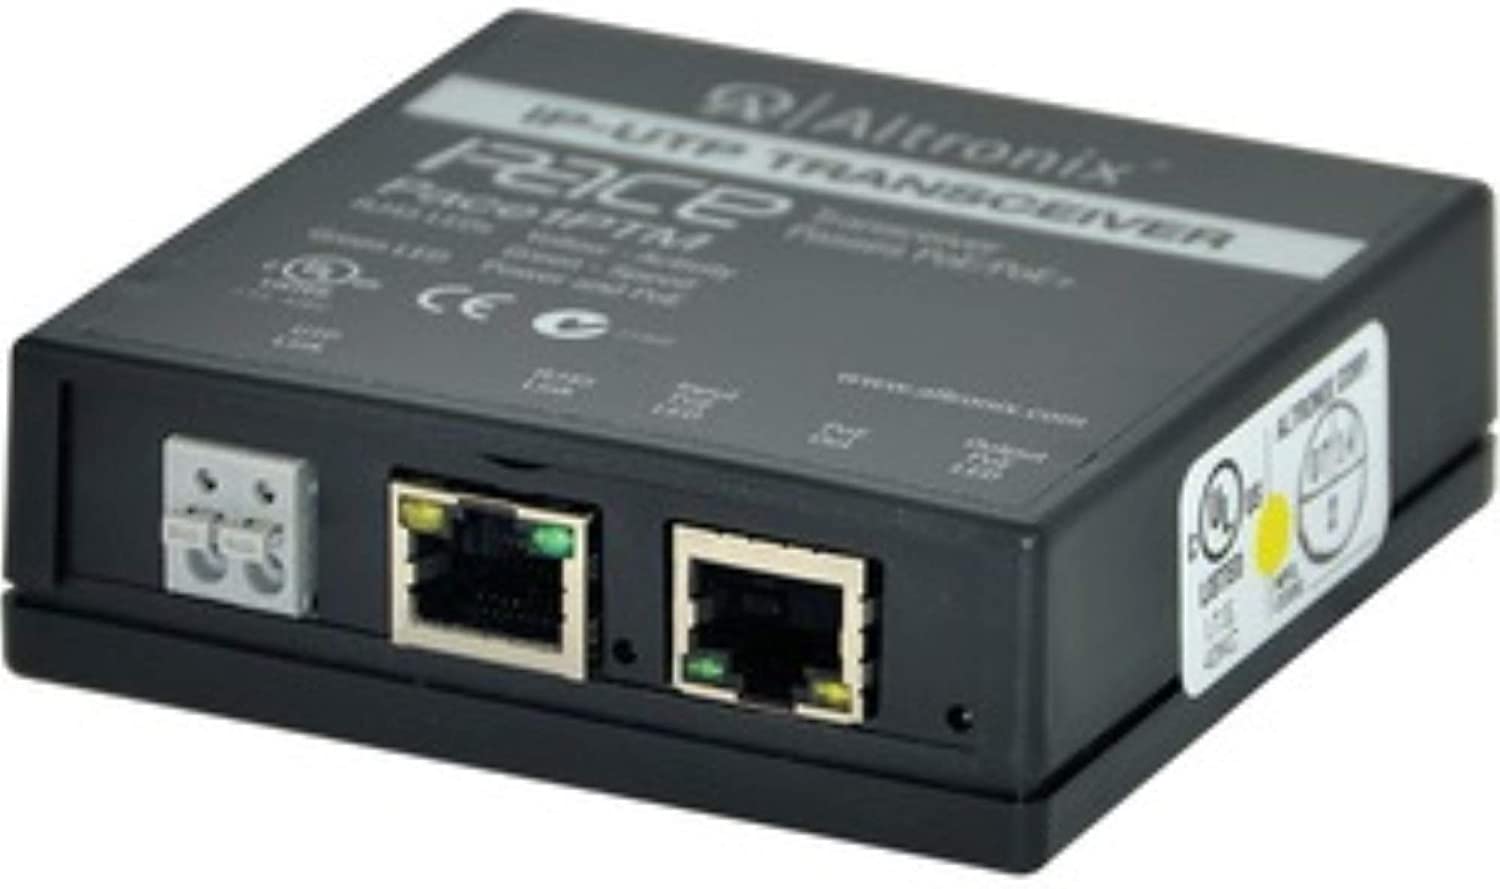 ALTRONIX - Security System Ethernet over UTP/CAT5e Transceiver 500 m @ 100 Mbps